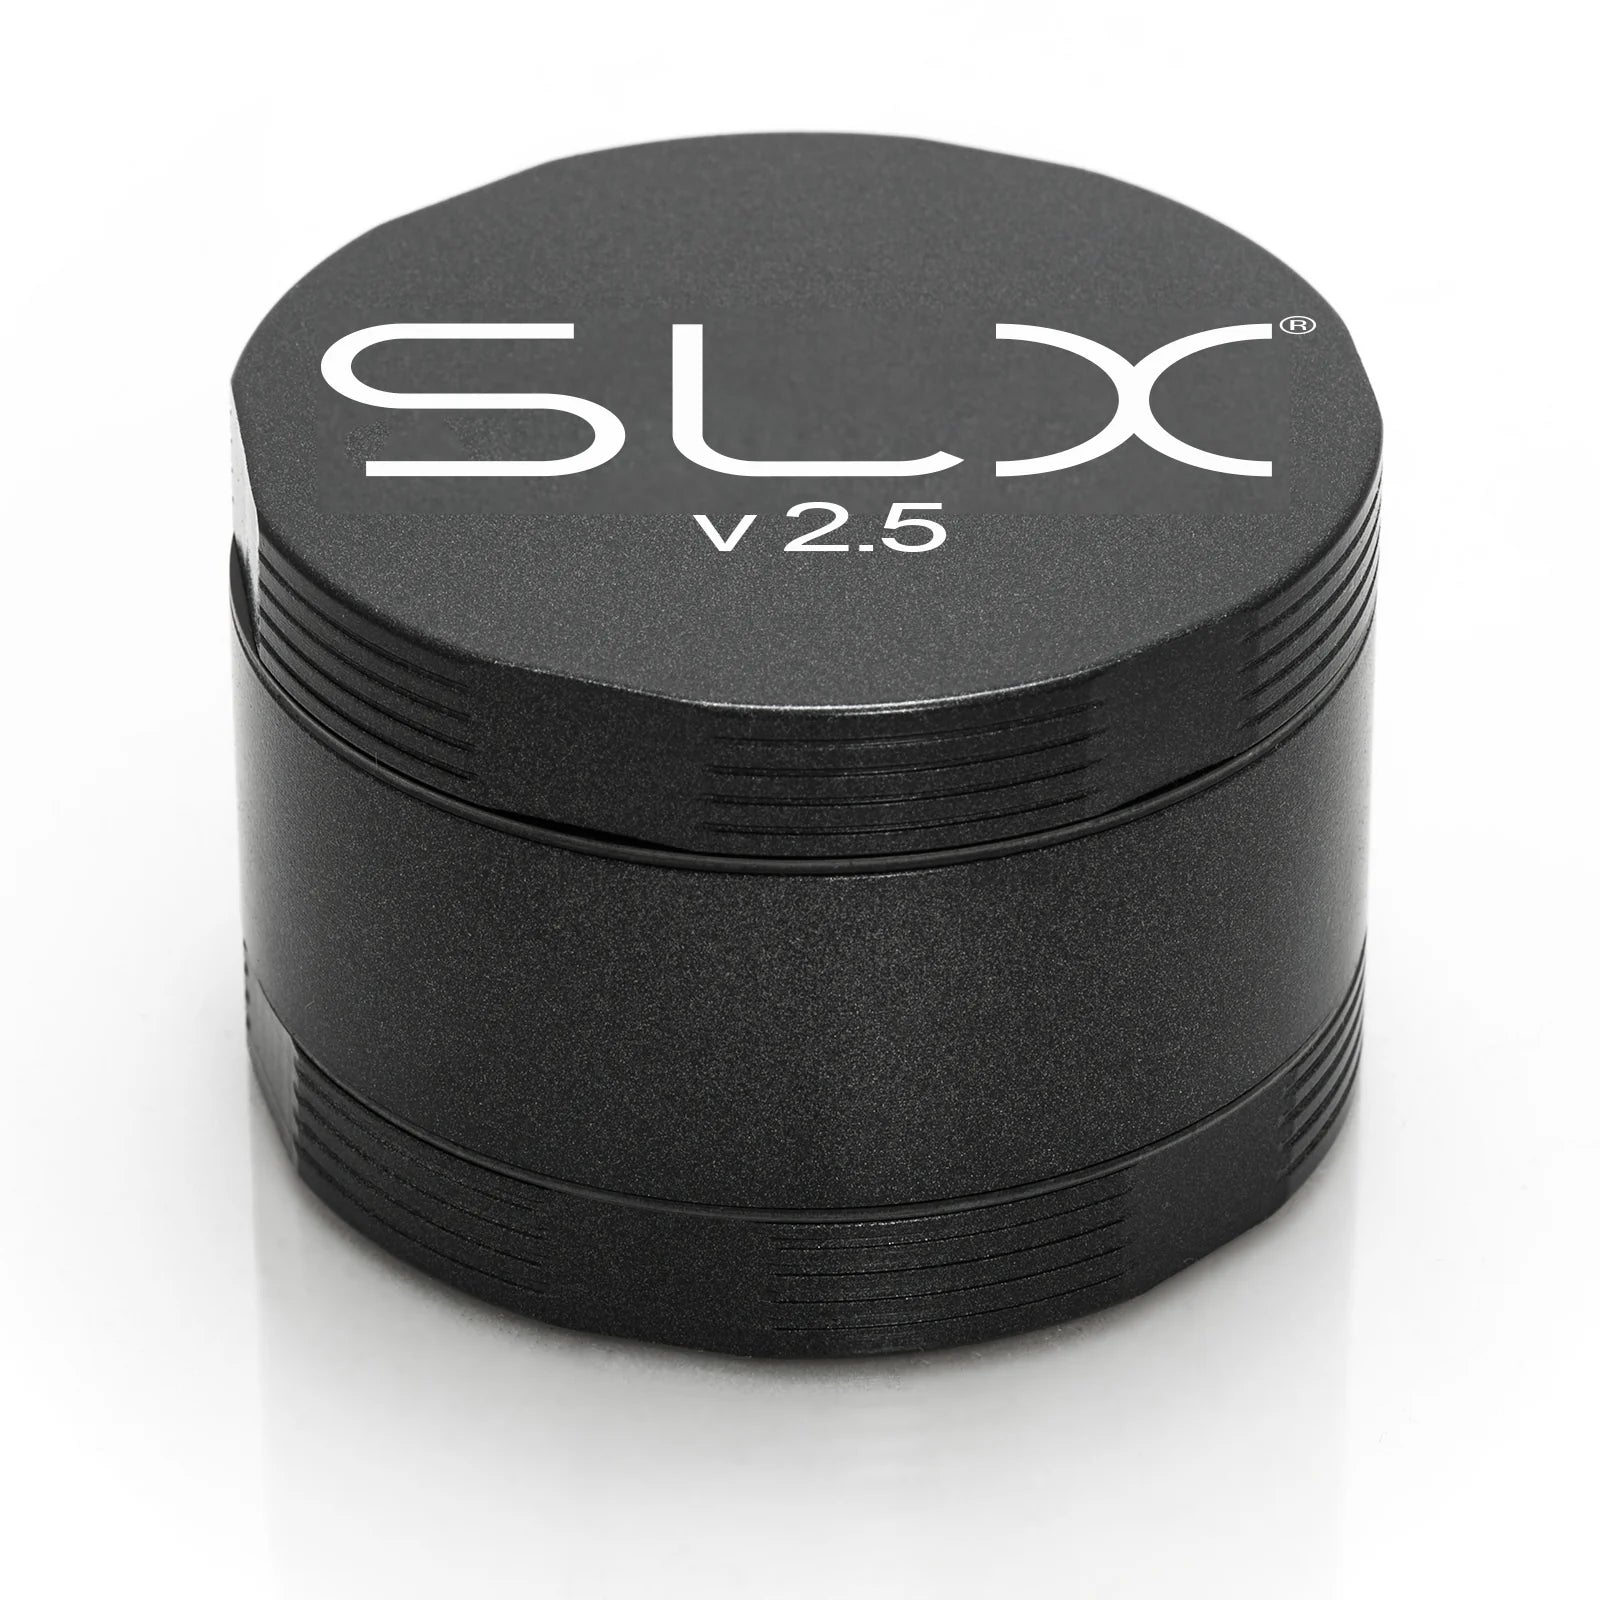 SLX v2.5 2.0" Ceramic Coat Grinder - Black